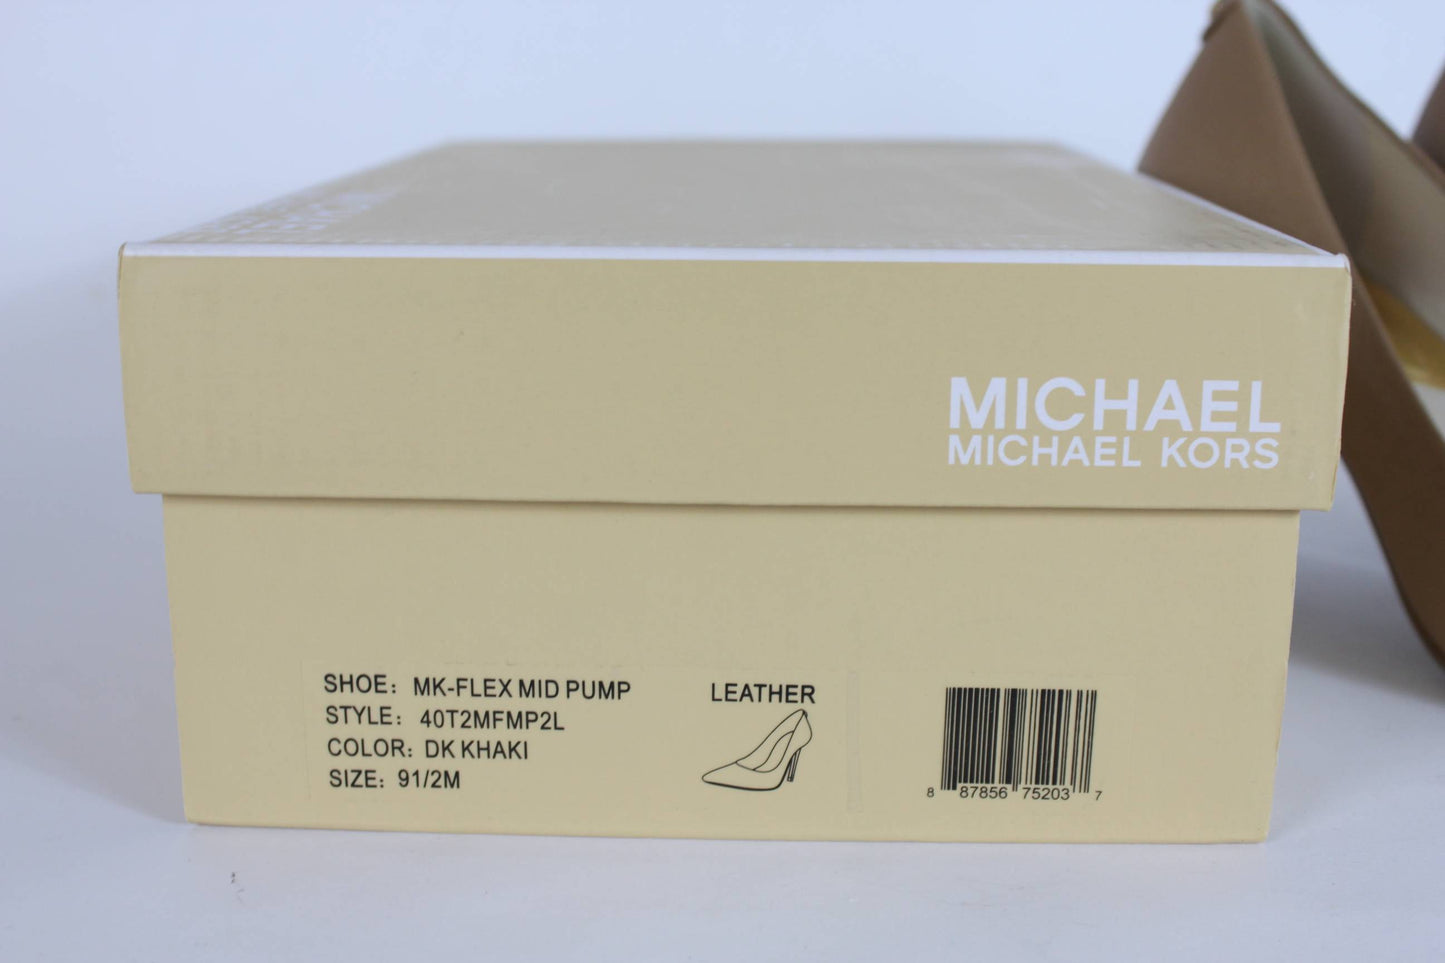 Michael Kors Leather Beige Flex Mid Pump Heel Shoes